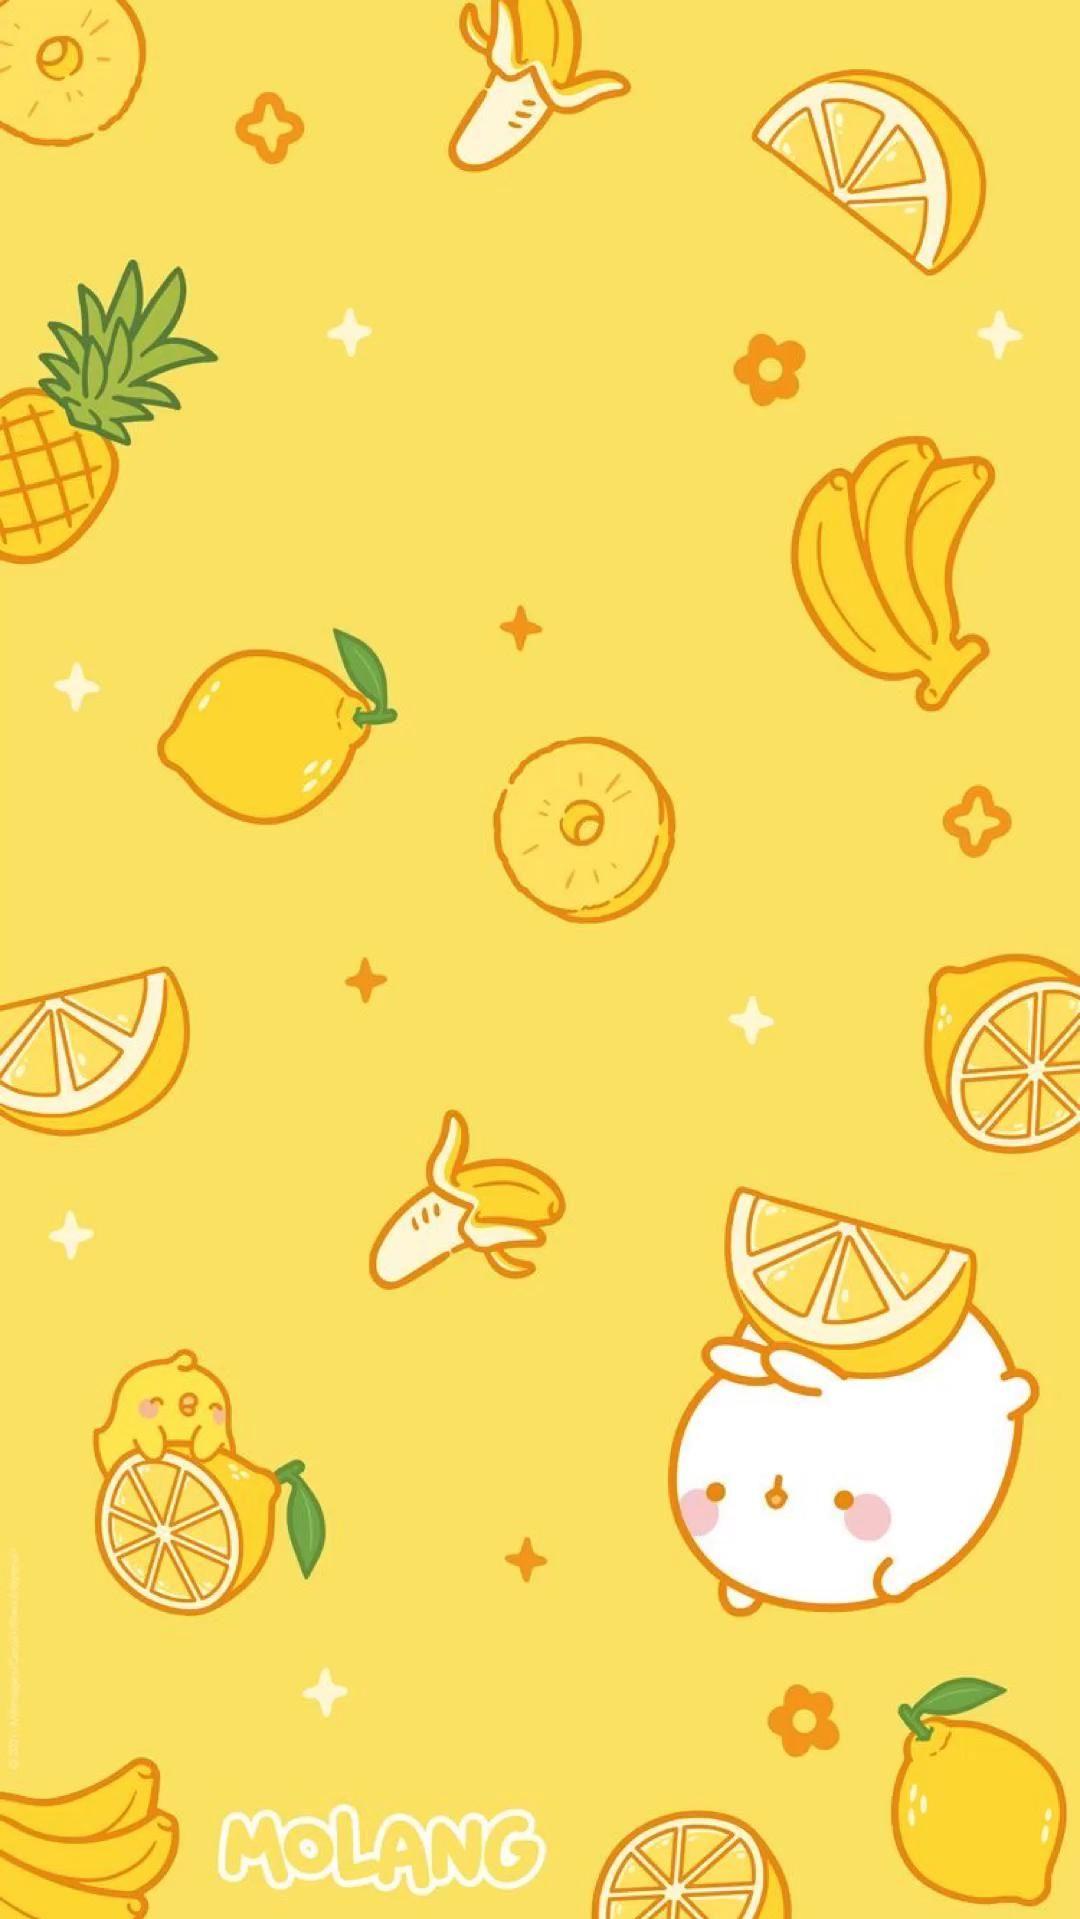 Yellow Molang Wallpaper iPhone Cute Cartoon